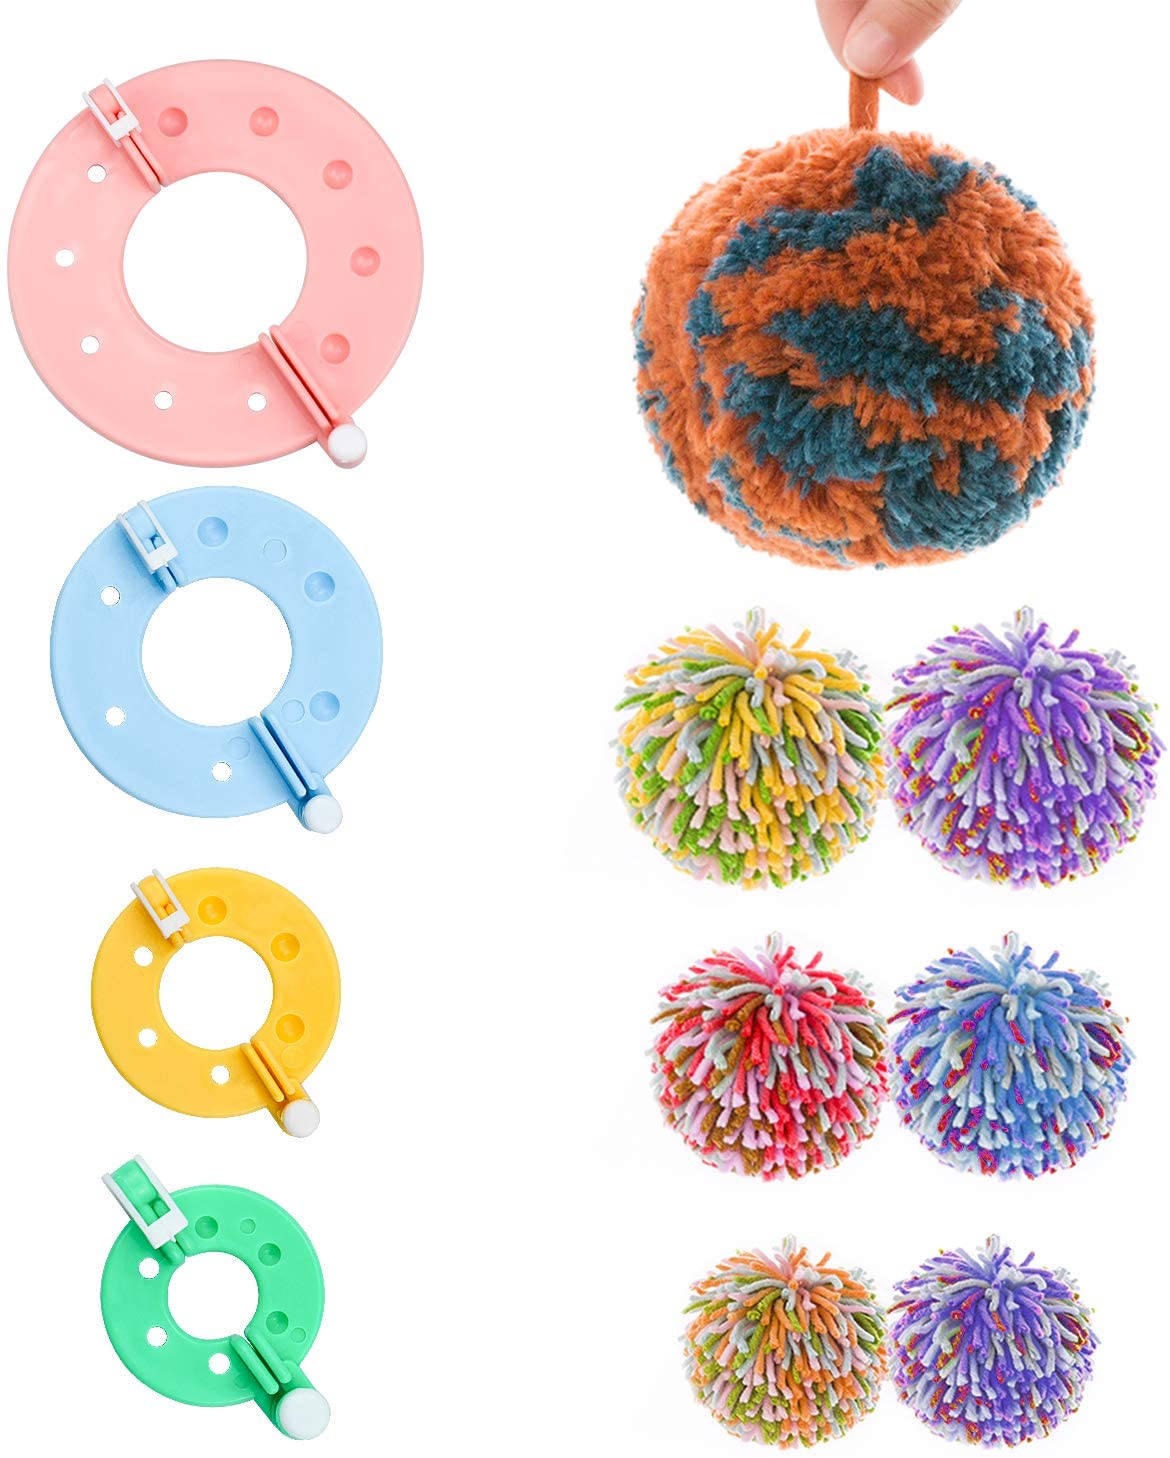 8 Pcs Pompom Maker 4 Sizes Pom Pom Maker Craft Fluff Ball Weaver Kit Pom Pom Maker Pom Pom Template Fluff Ball Diy Needle Craft Tool Kit For Kids Adults - image 5 of 9